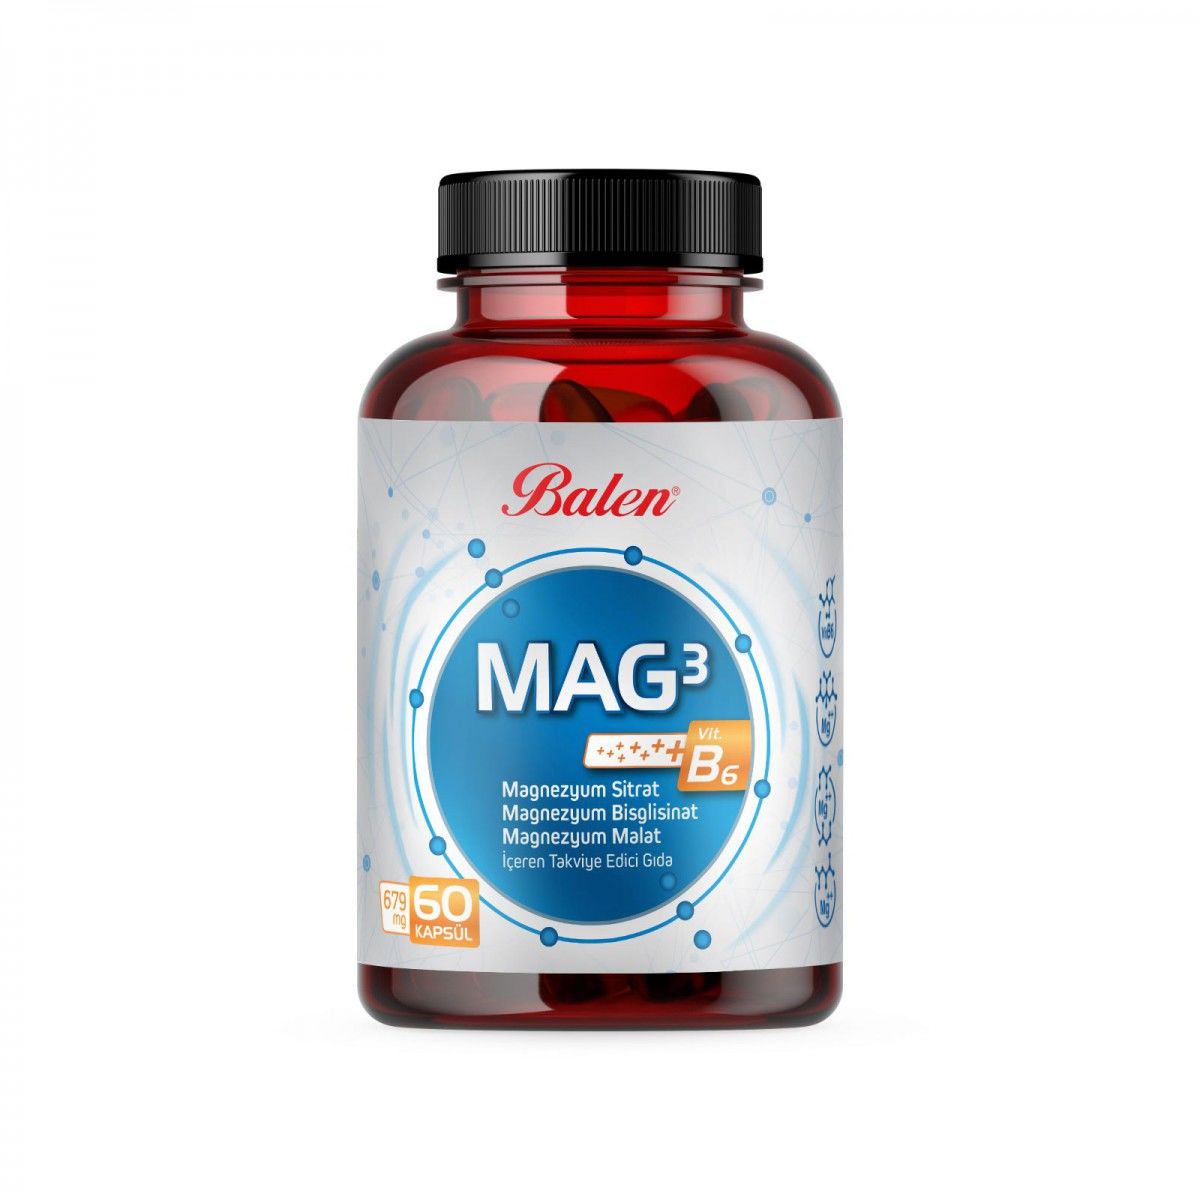 Balen Mag 3 Vitamin B6 60 Kapsül